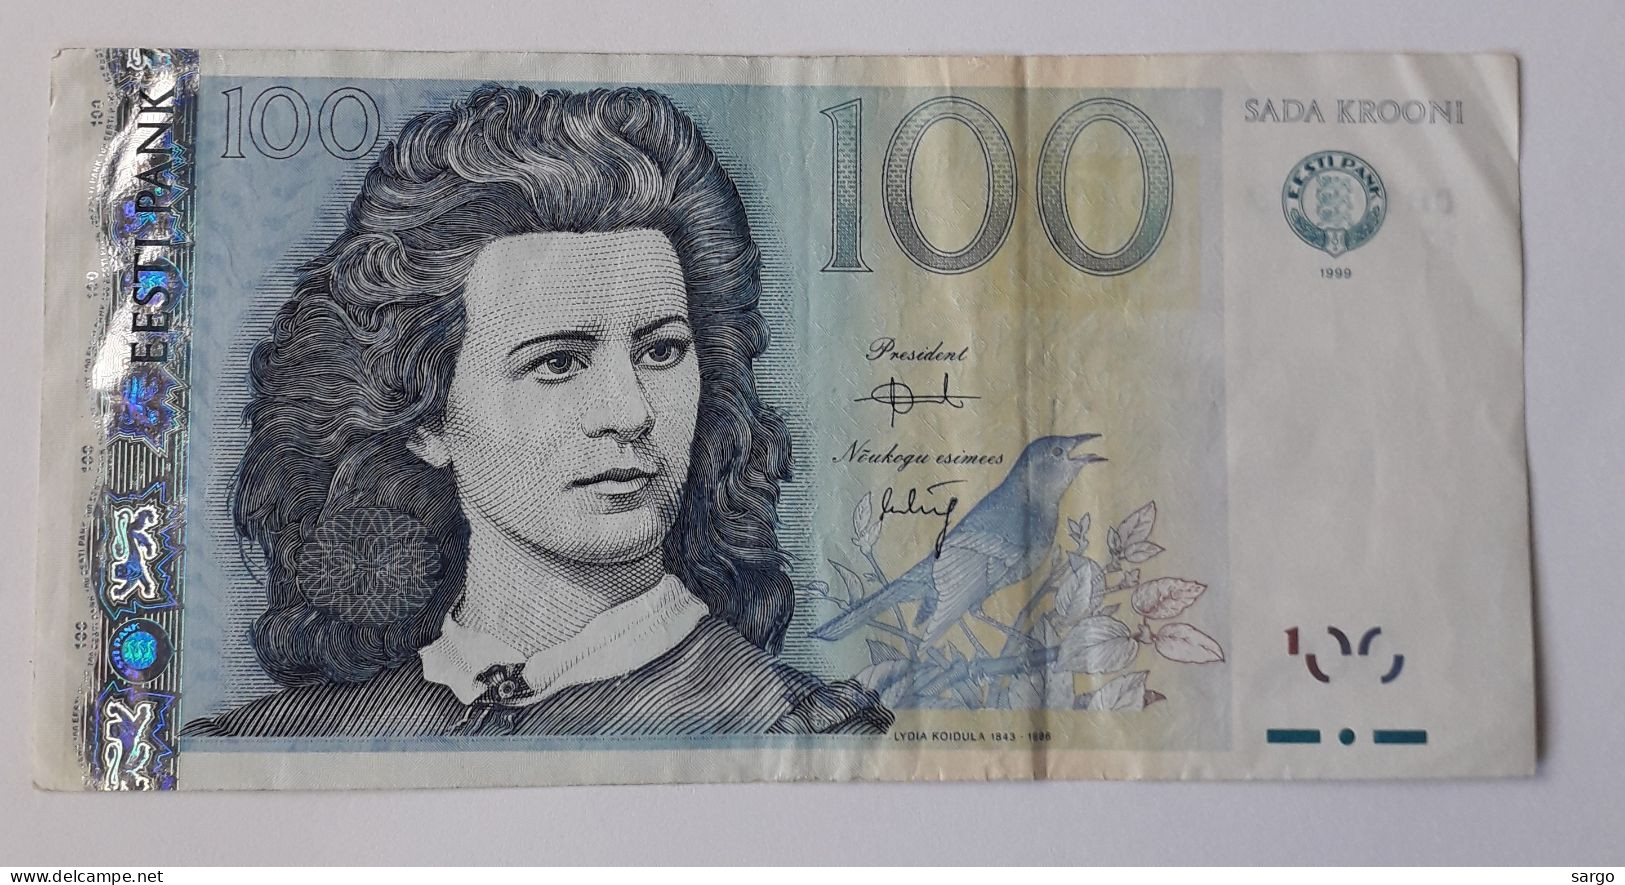 ESTONIA - 100 KROONI -  P 82 - 1999 -  CIRC - BANKNOTES - PAPER MONEY - CARTAMONETA - - Estonie